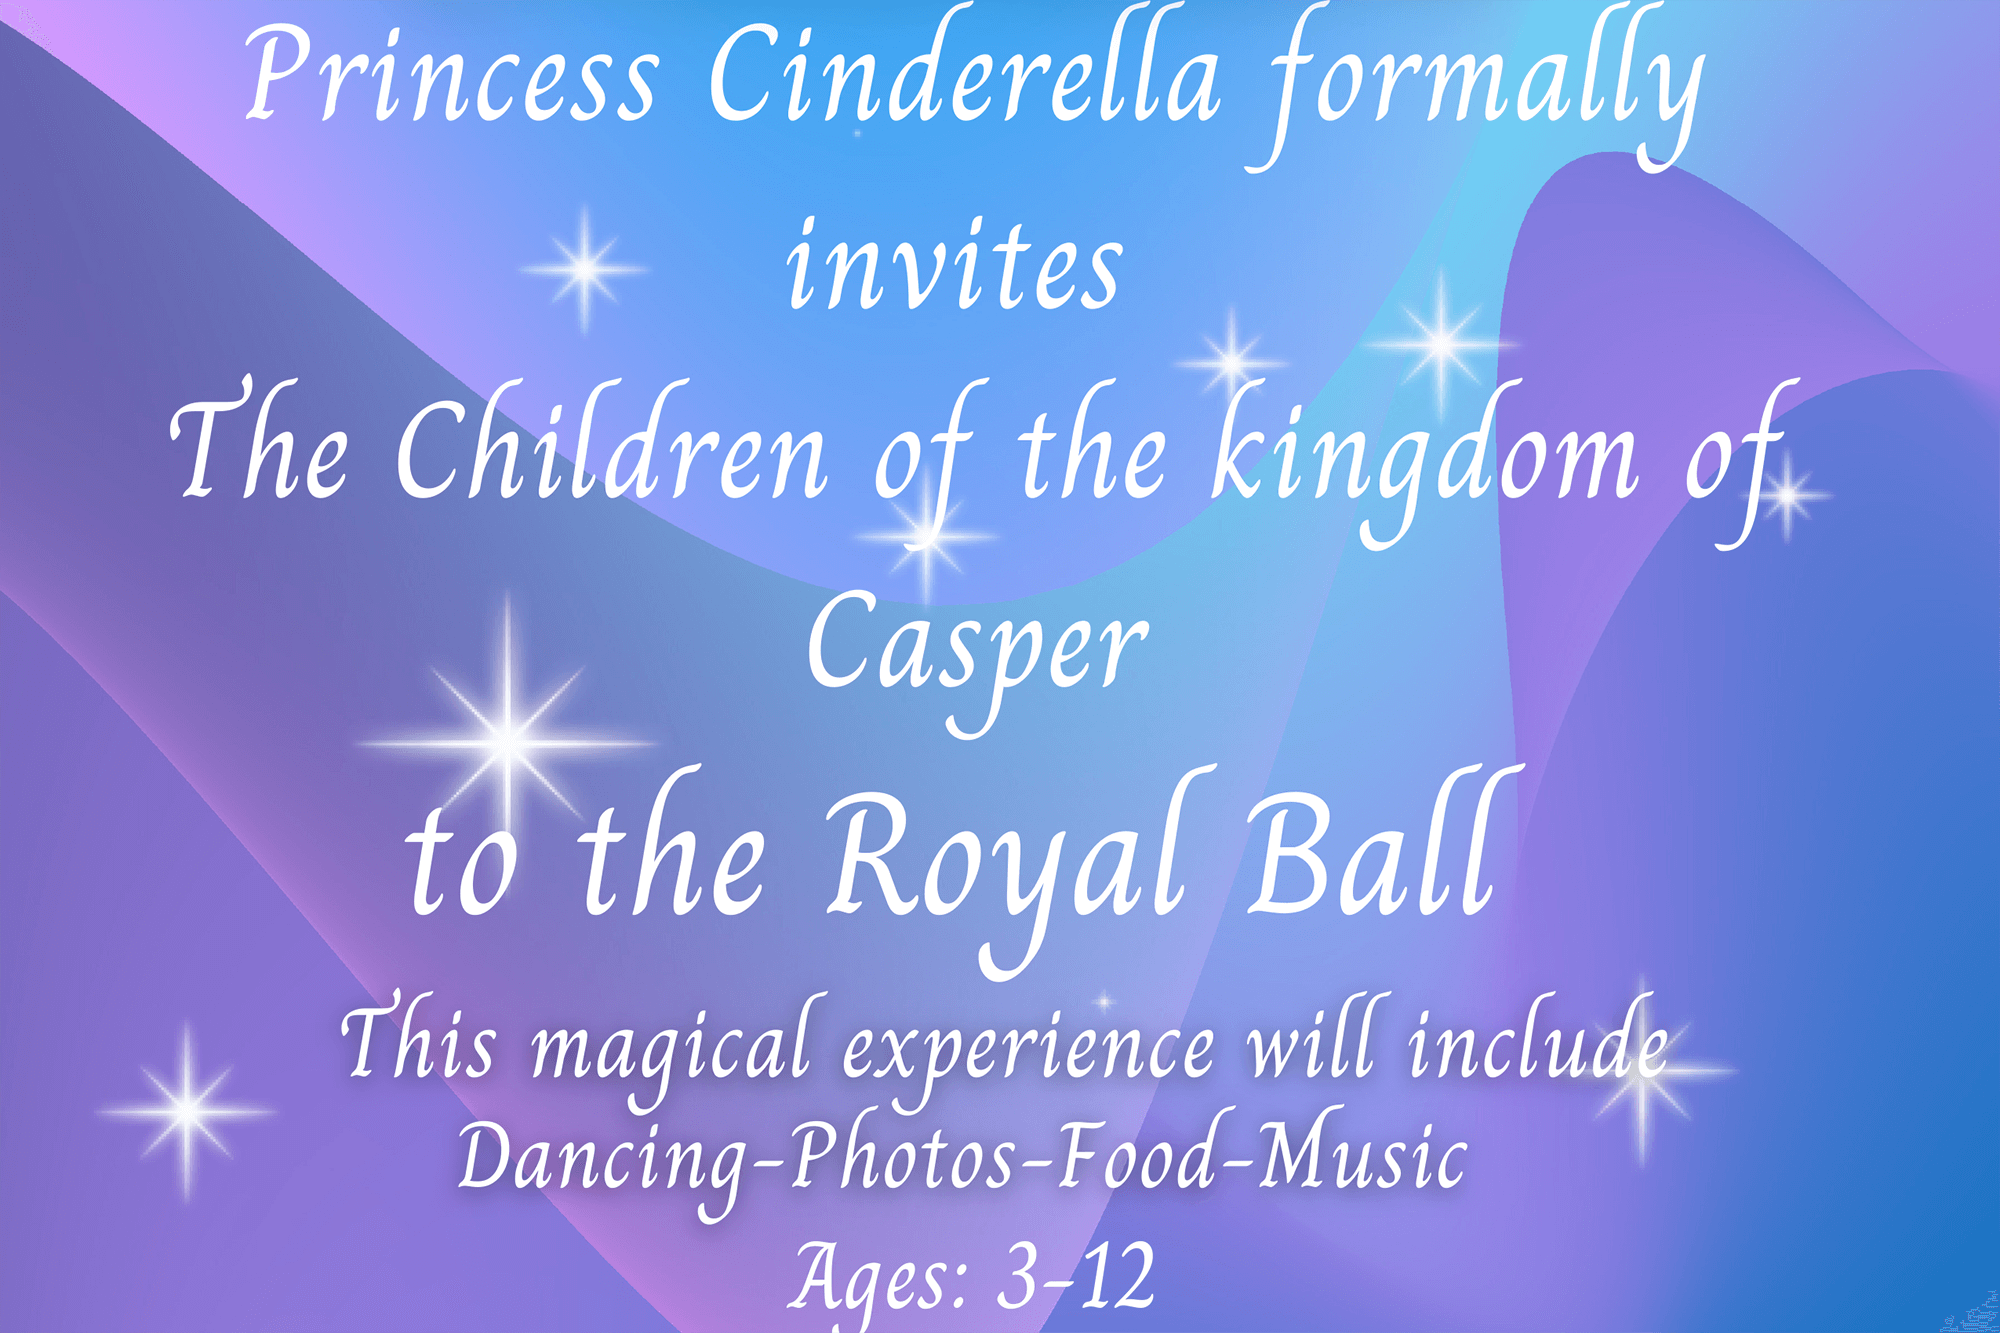 Image for Cinderella Ball press release.